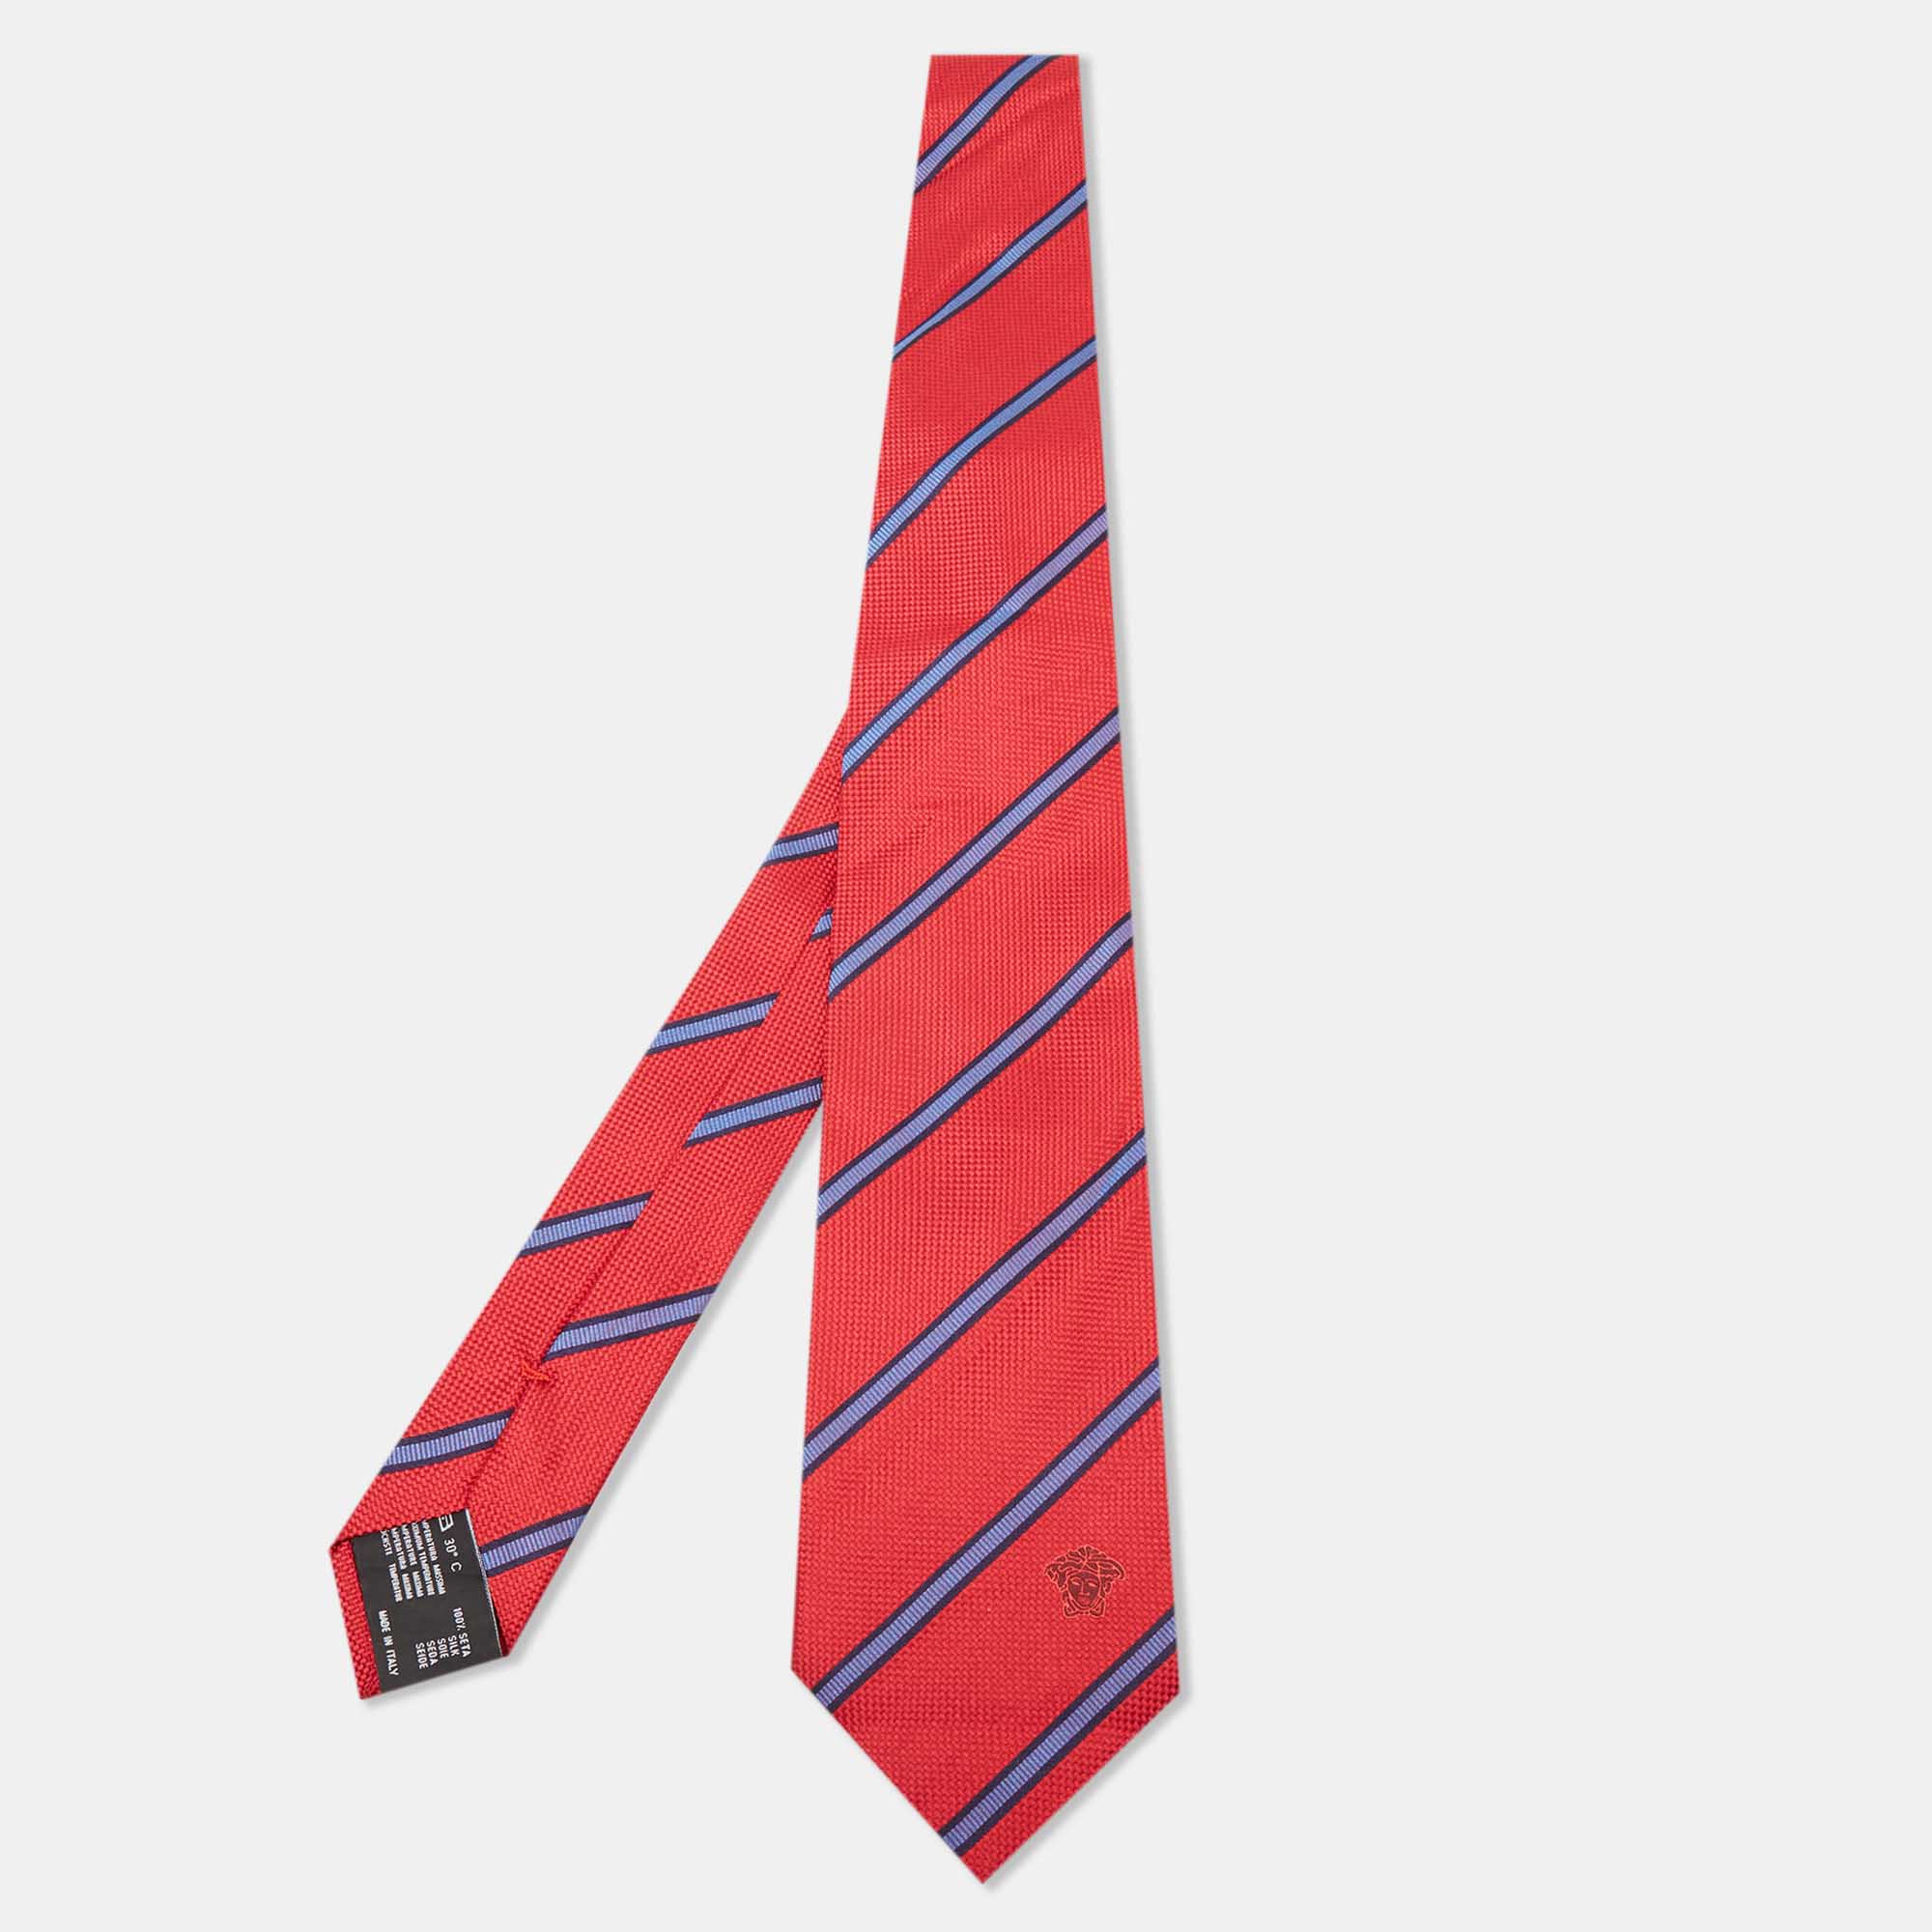 Versace Red/Blue Diagonal Striped Silk Tie